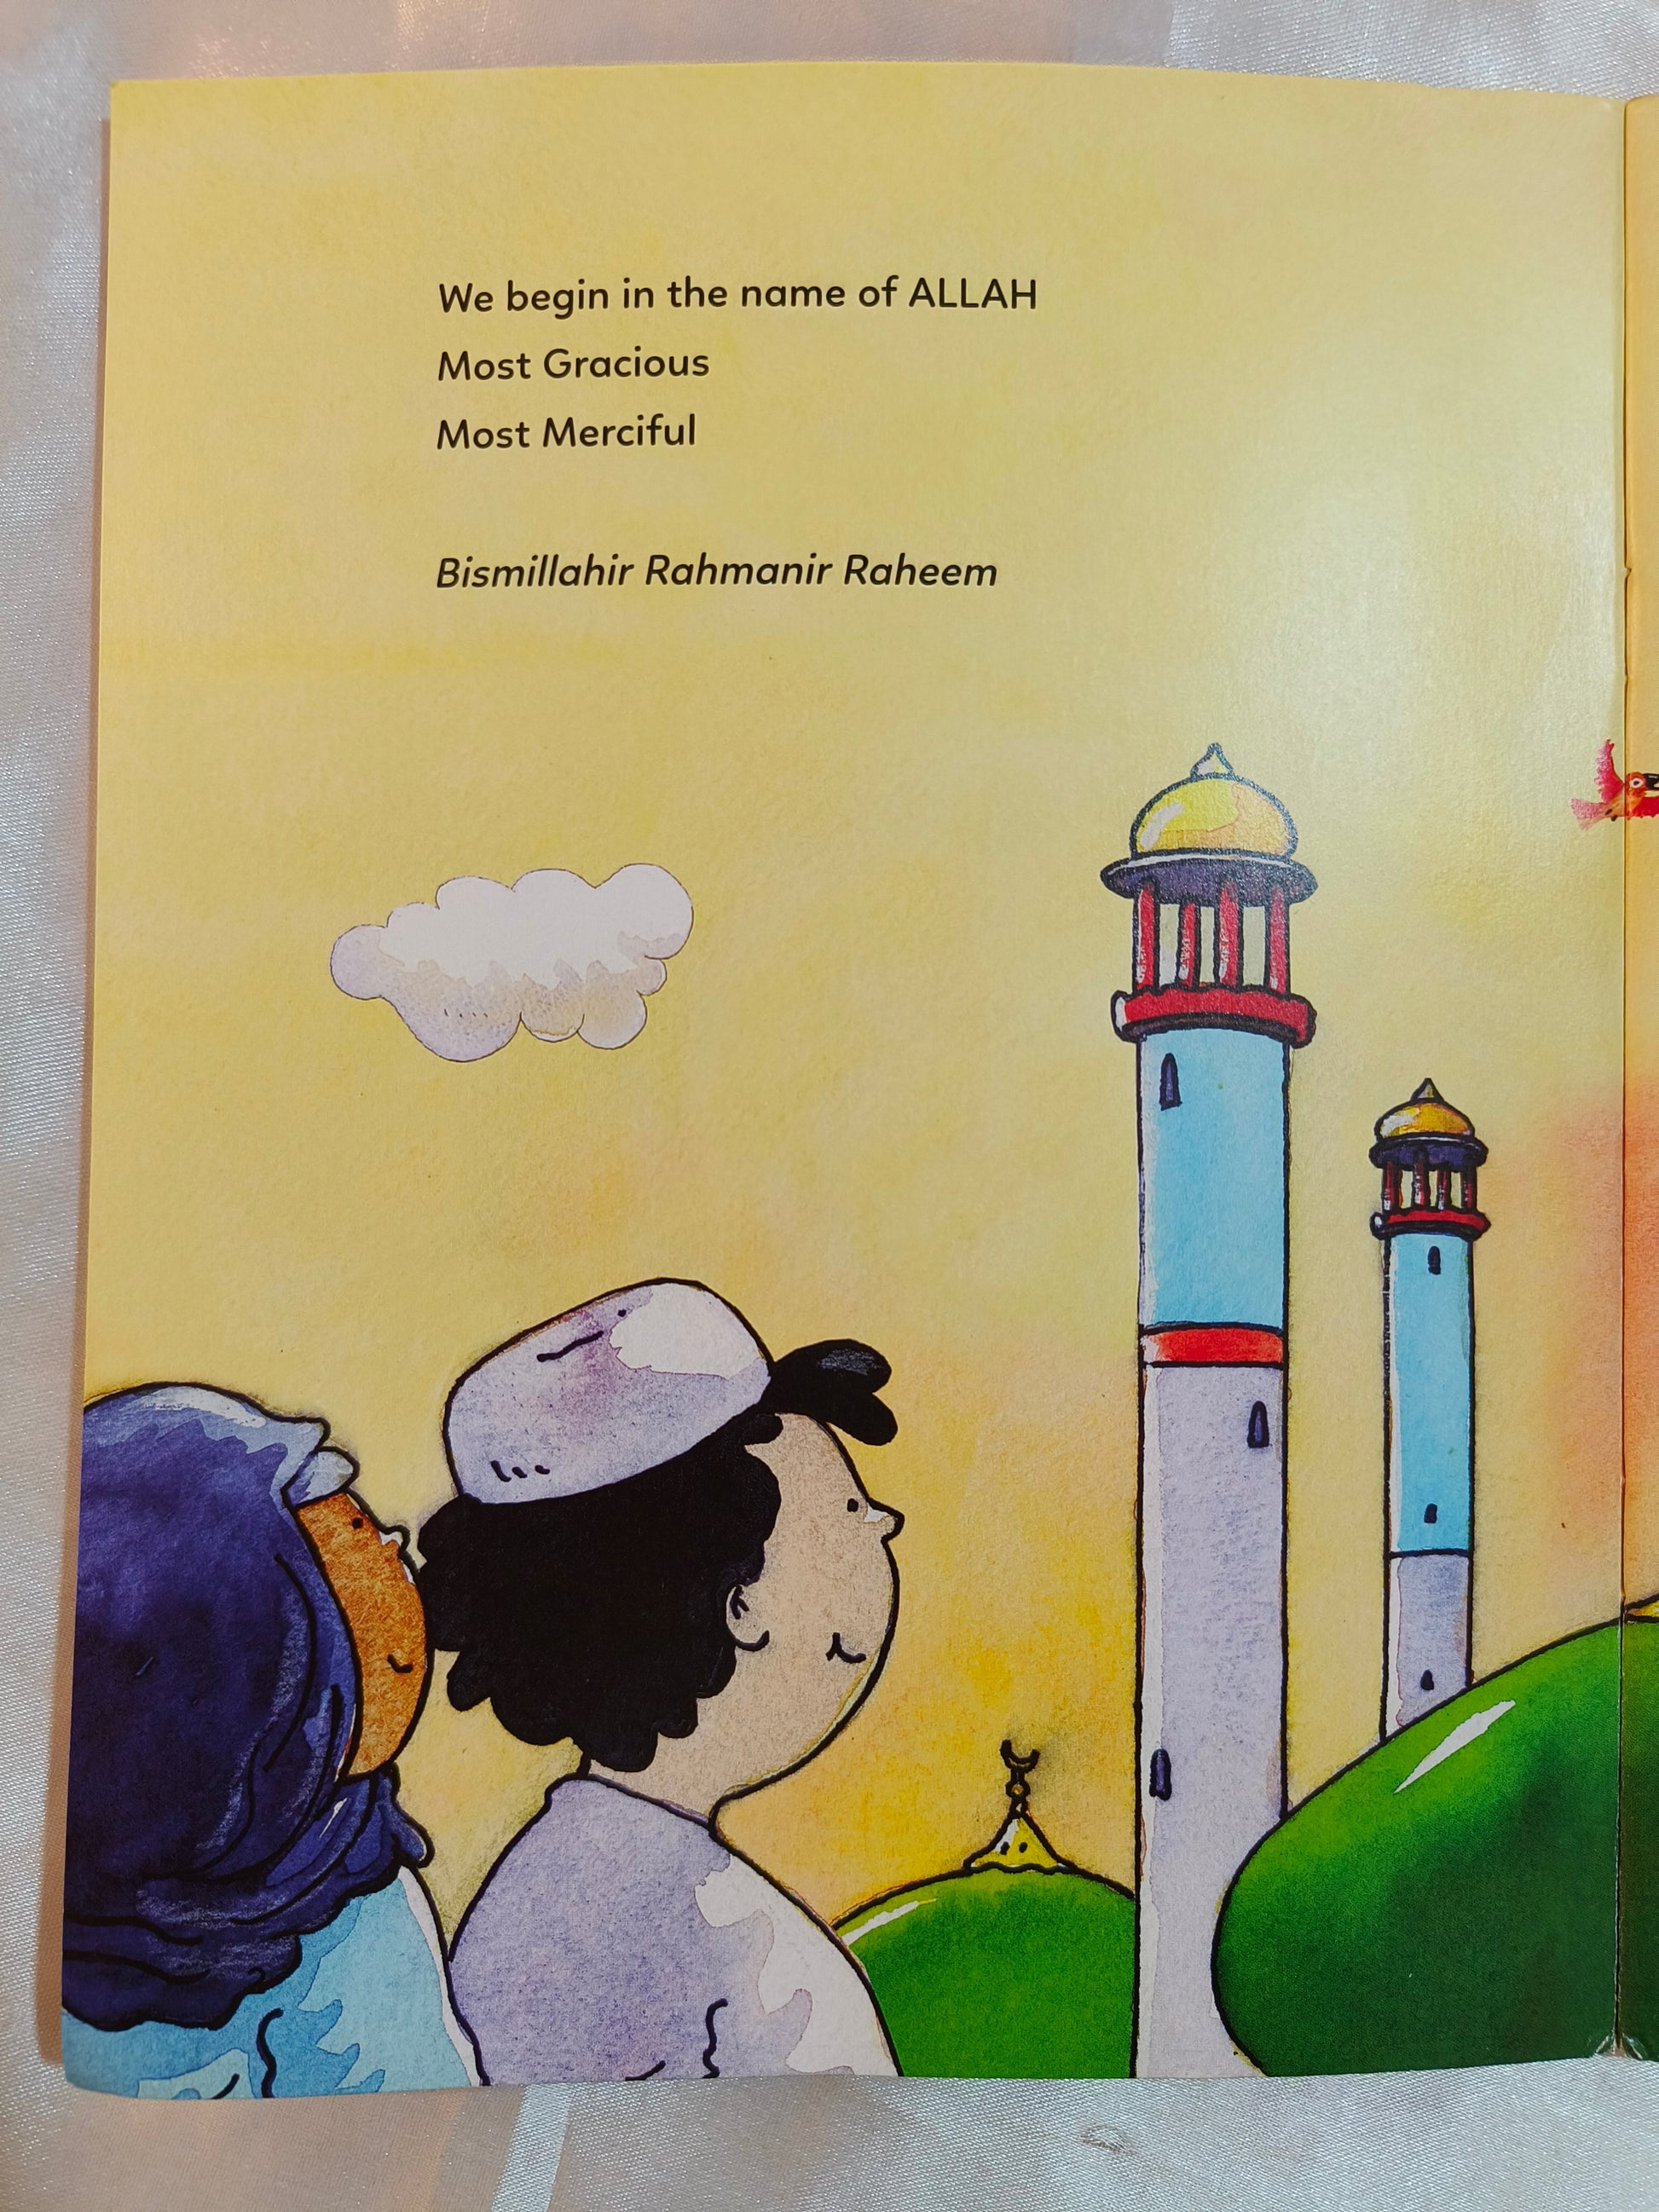 WHO IS ALLAH? - alifthebookstore